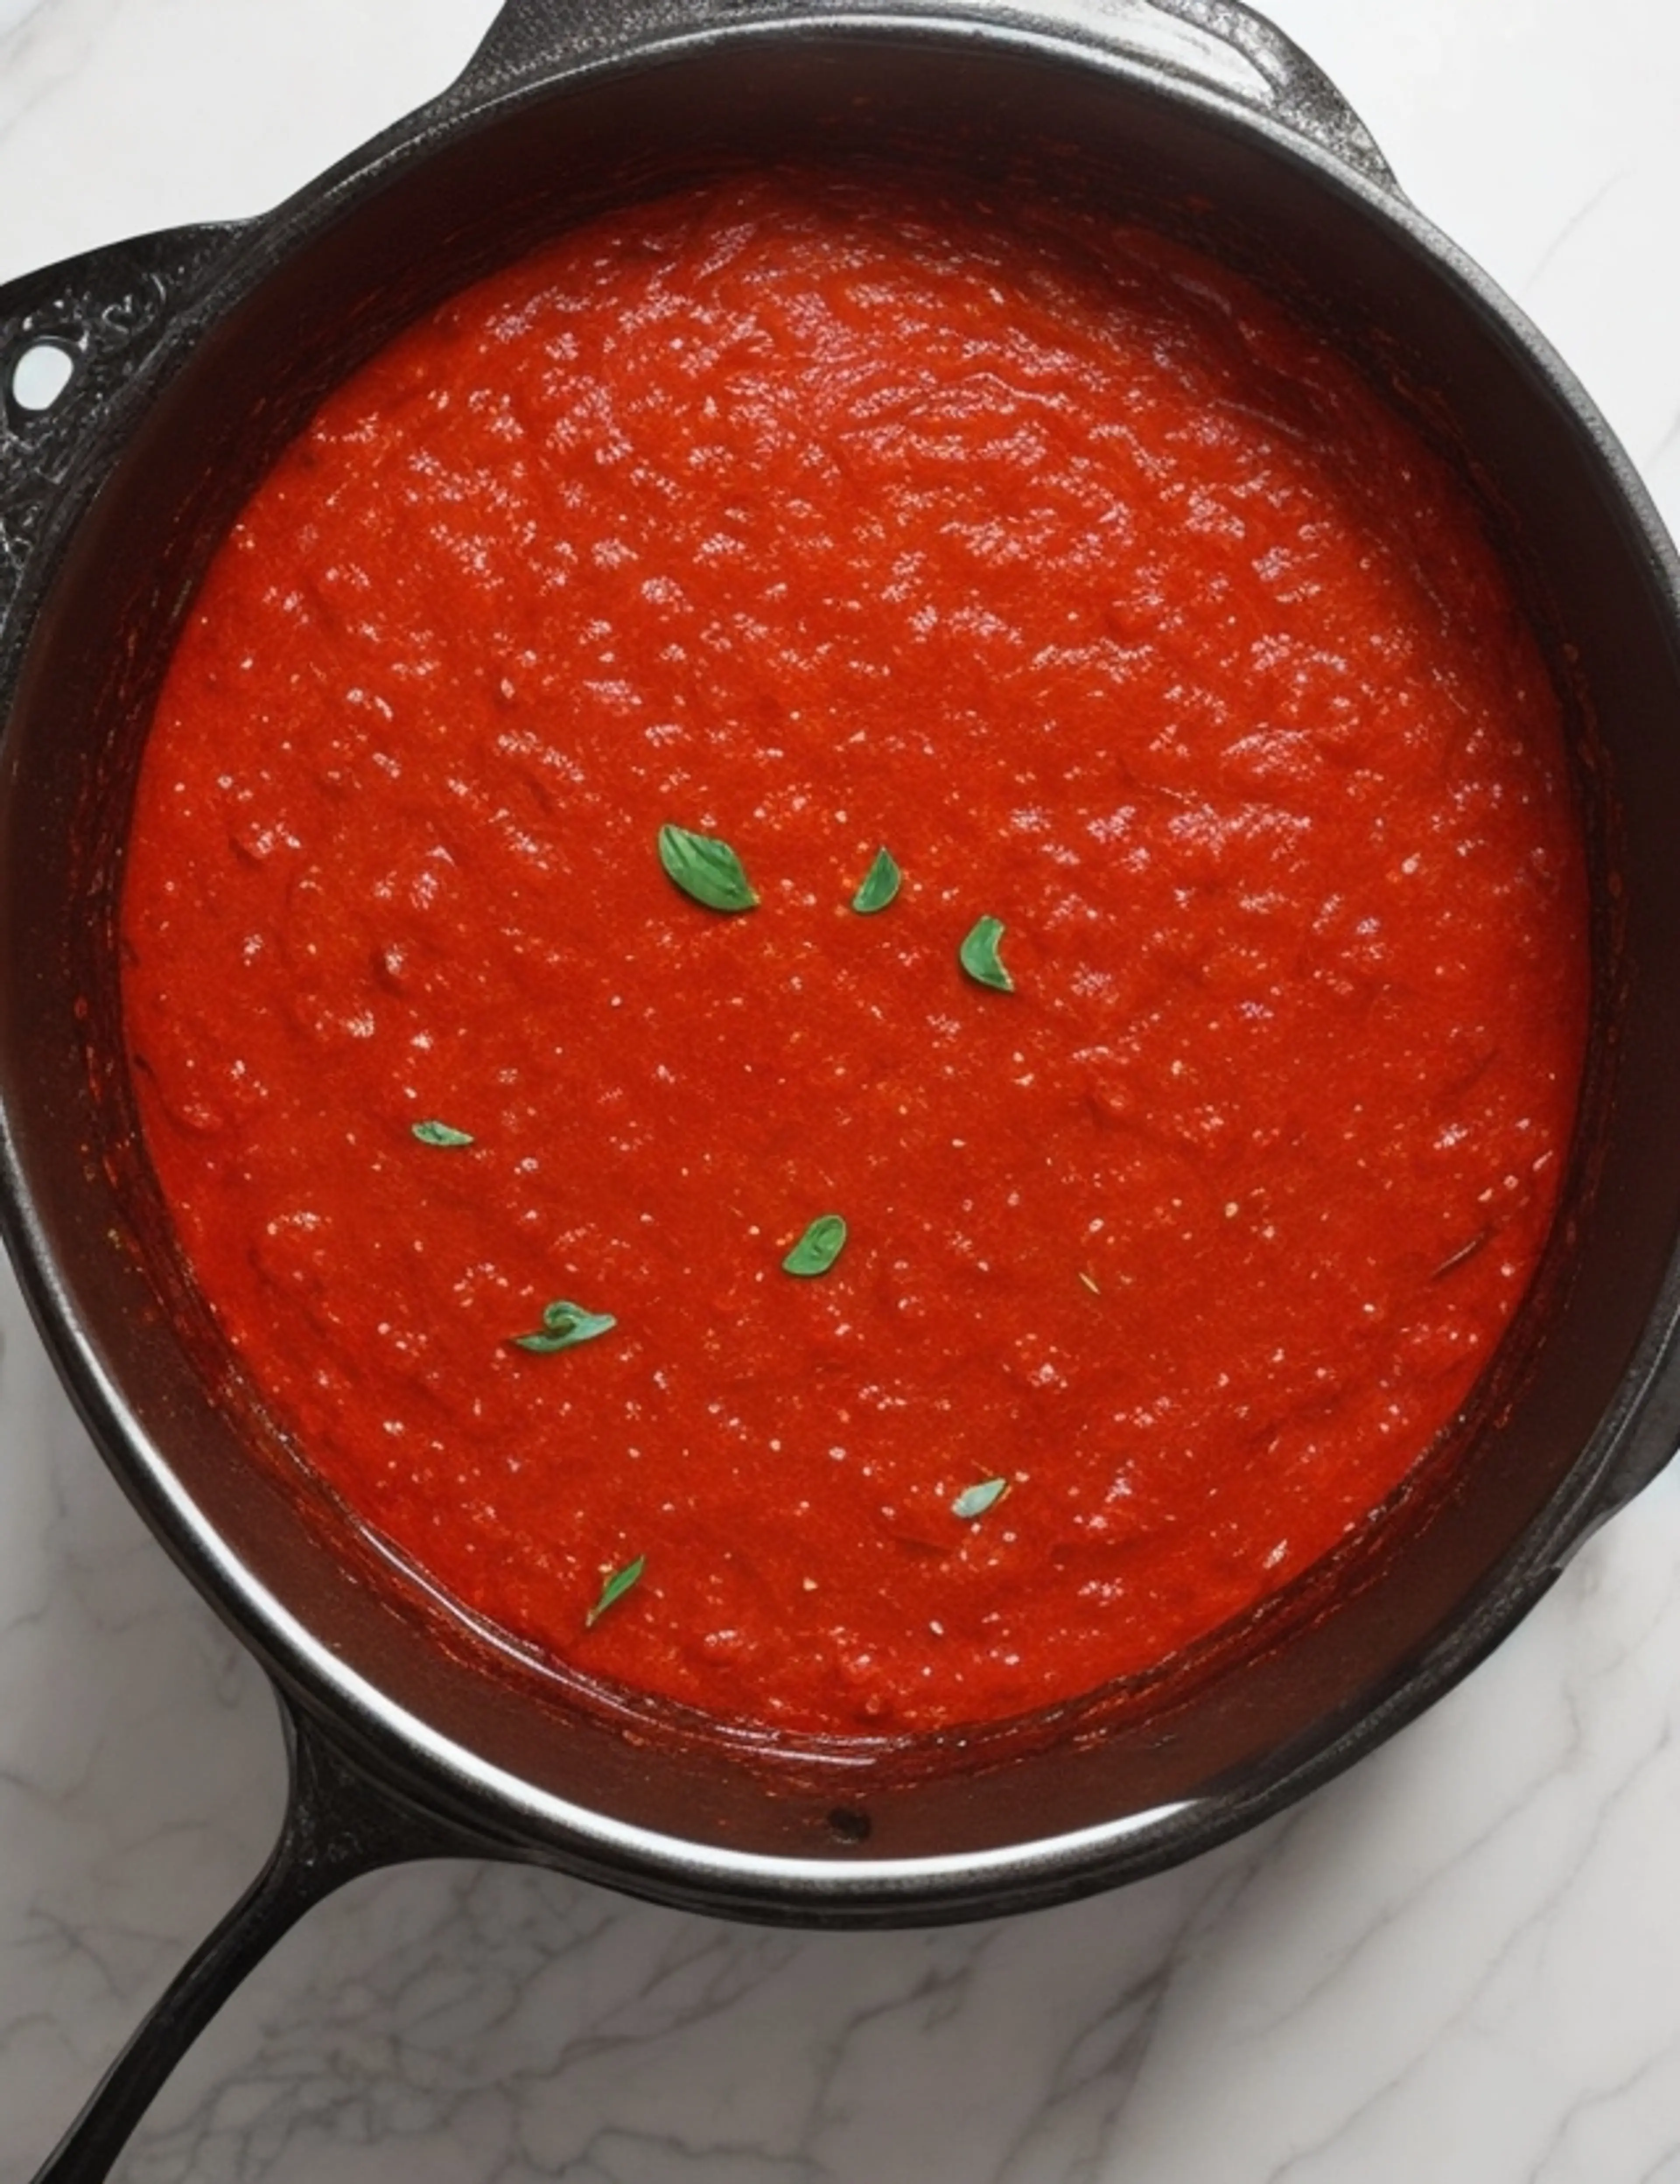 Vortex Spaghetti Sauce